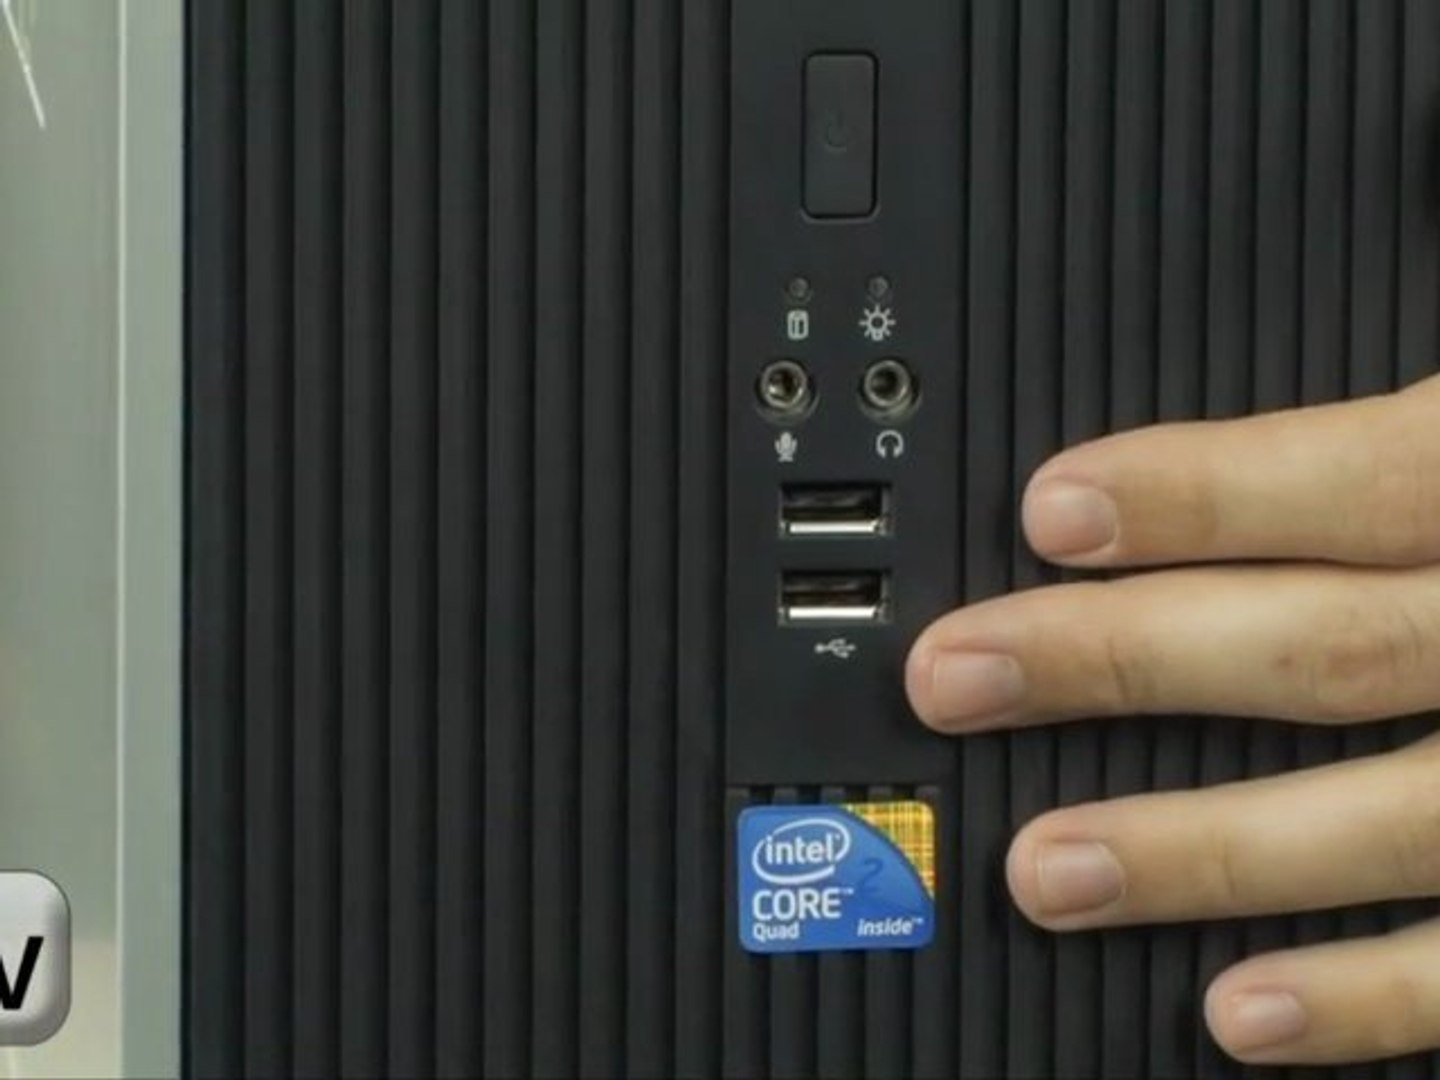 HP Compaq dc7900 NV487UT Desktop - video Dailymotion